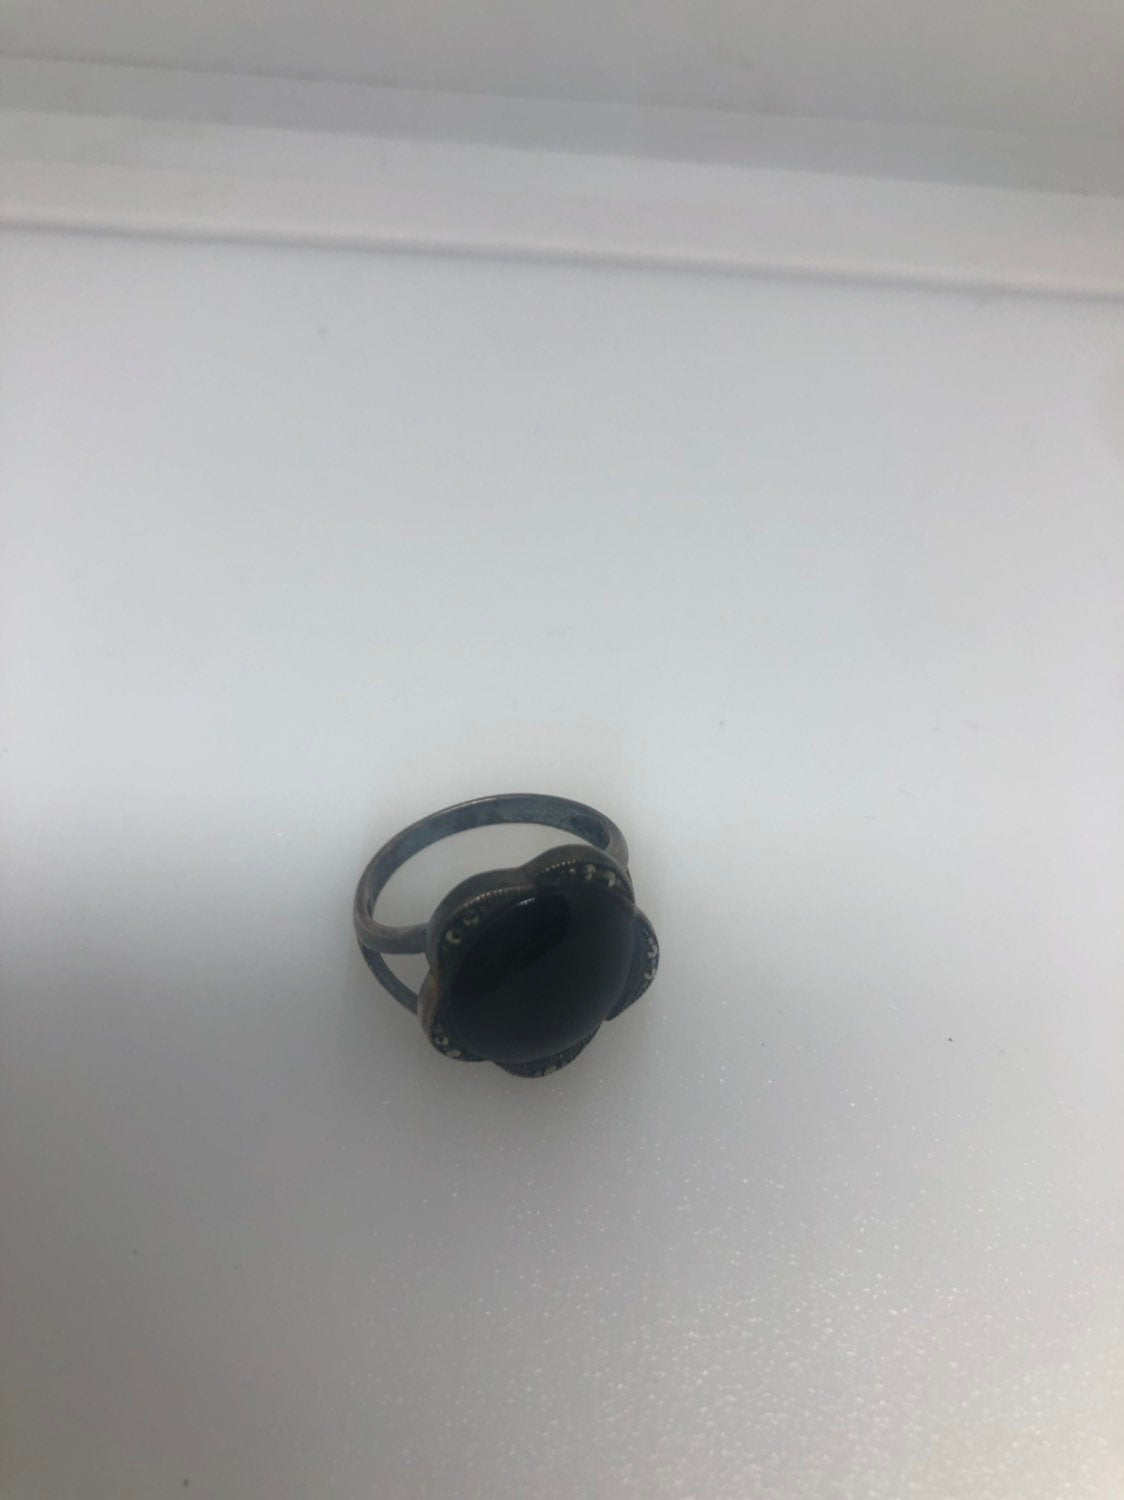 Vintage Genuine Black Onyx Silver marcasite Ring